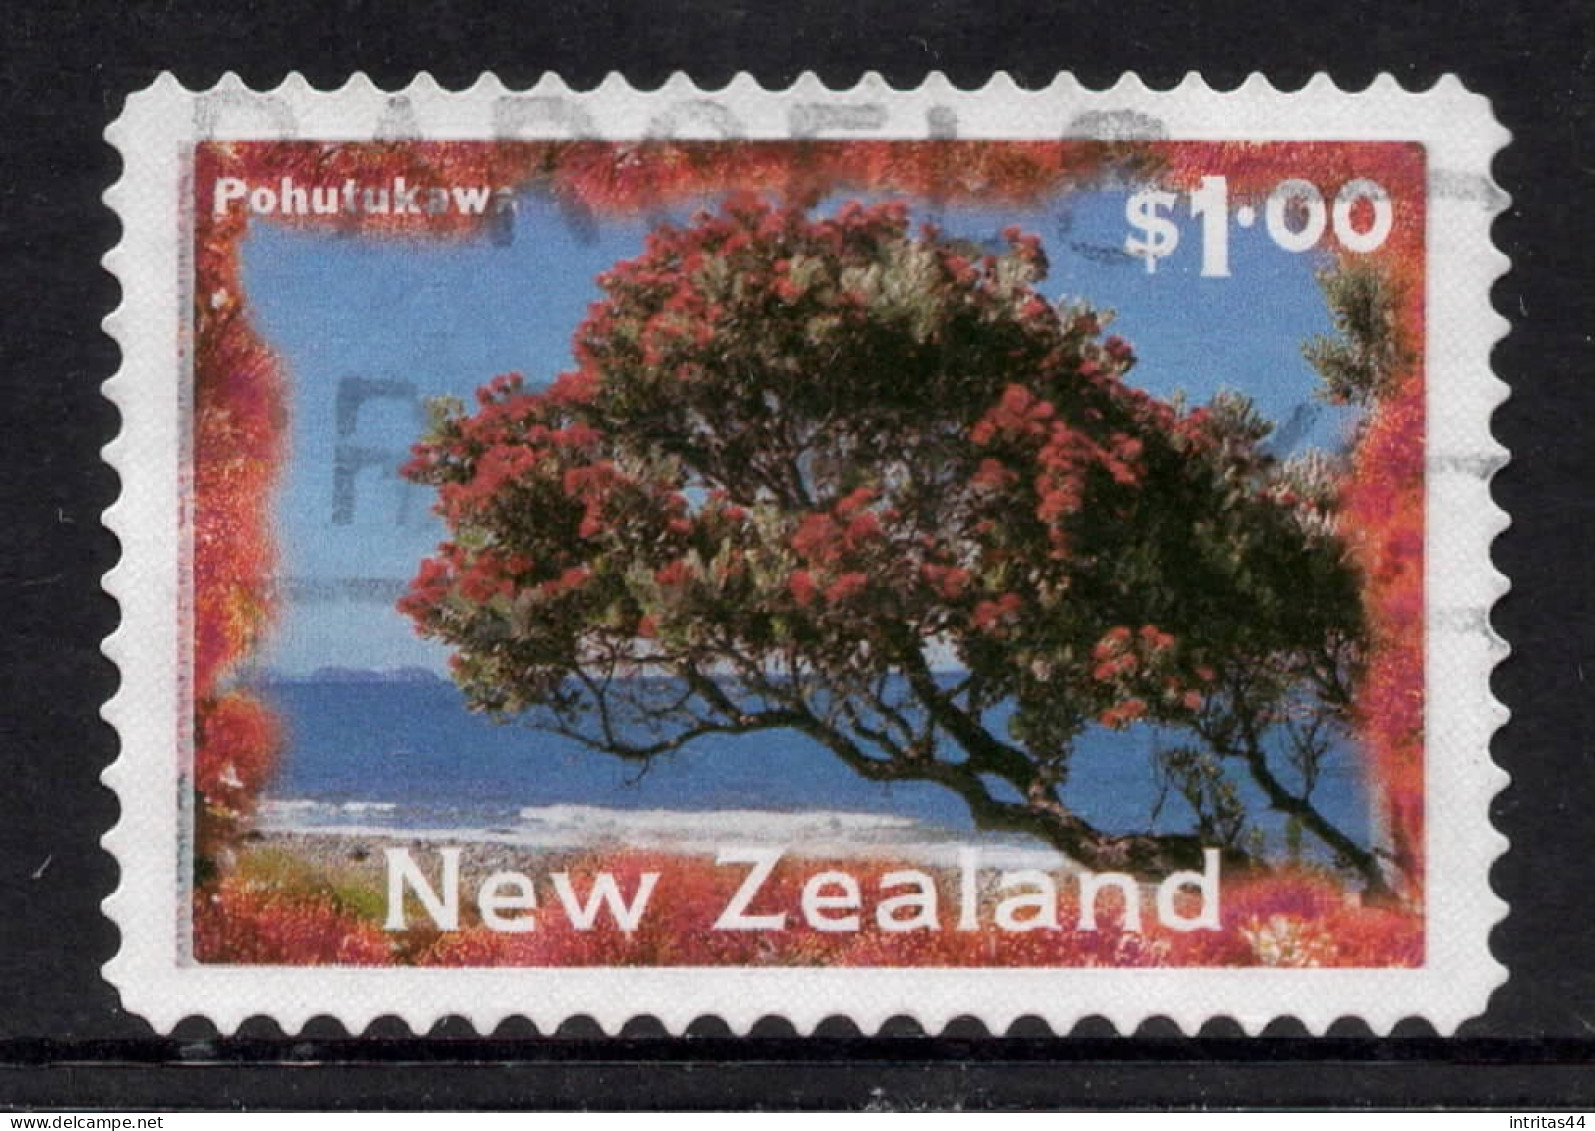 NEW ZEALAND 1996 AIRPOST  $1.00 " POHUTUKAWA " SA.  STAMP VFU - Used Stamps